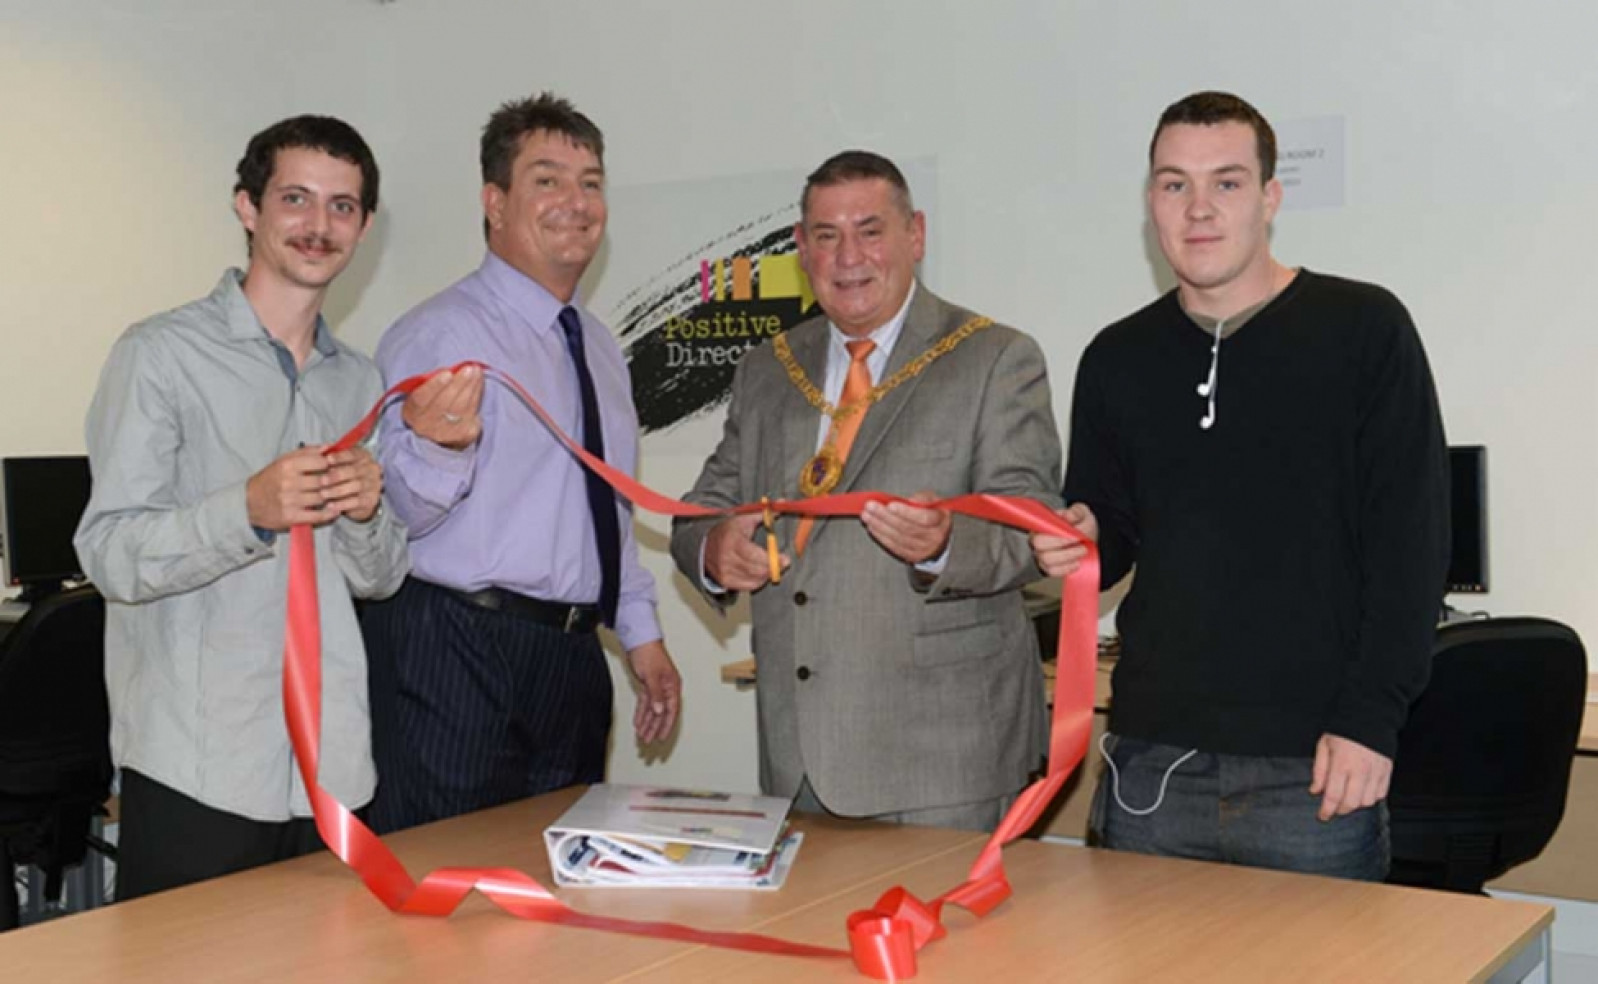 Mayor of Walsall opens new Traineeships for Indust...